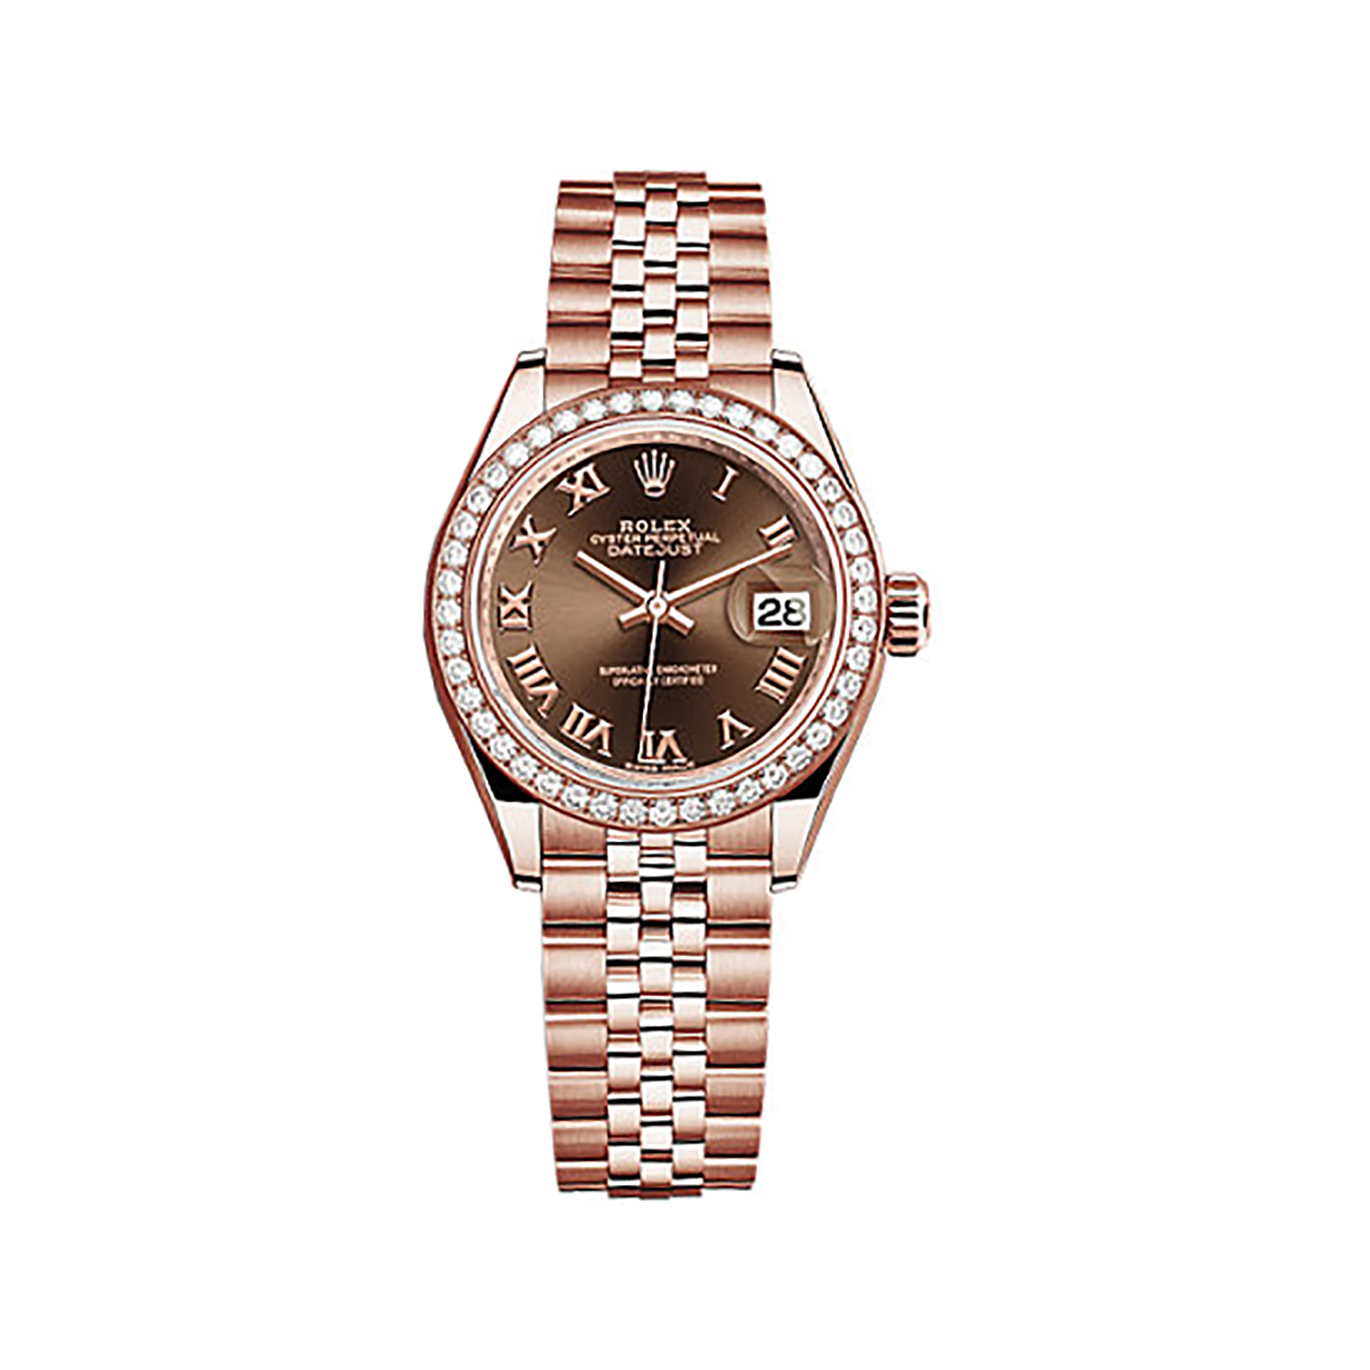 Lady-Datejust 28 279135RBR Rose Gold & Diamonds Watch (Chocolate)